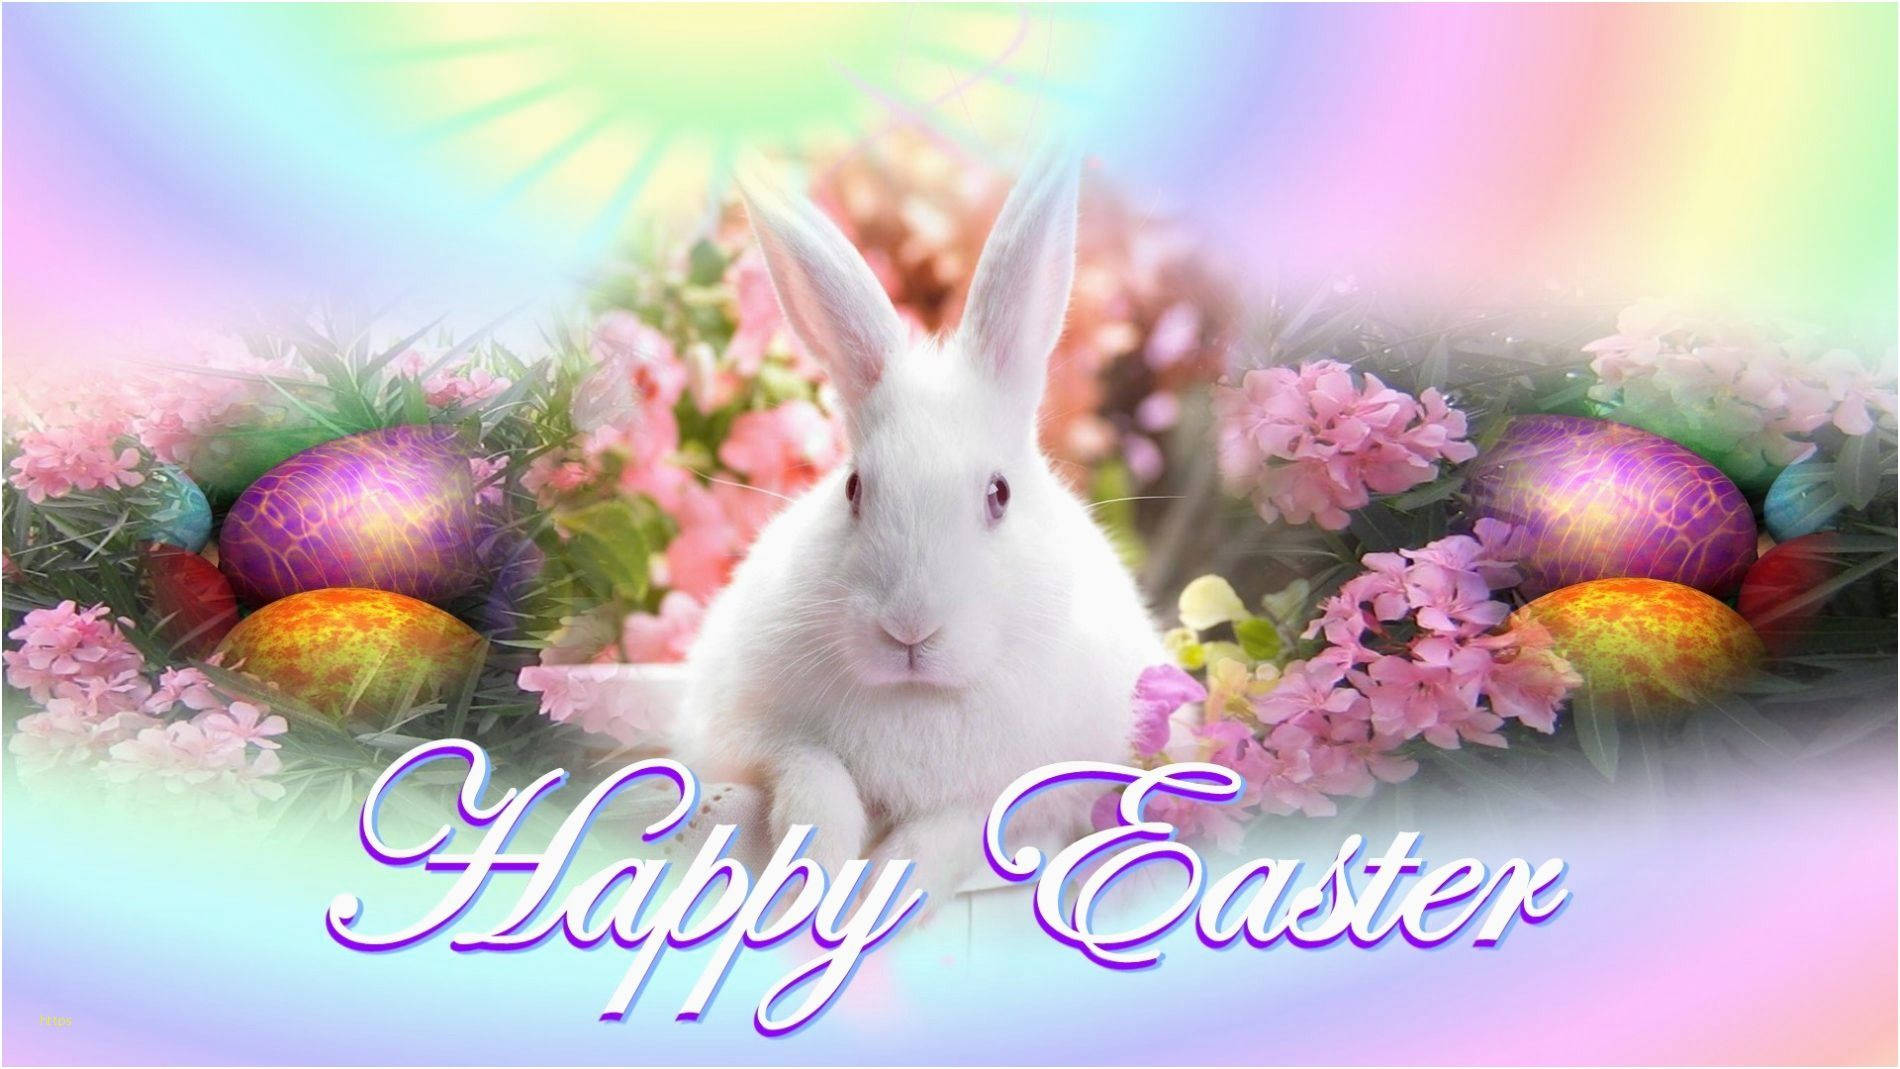 Glade påske Real White Rabbit Greeting Card Wallpaper